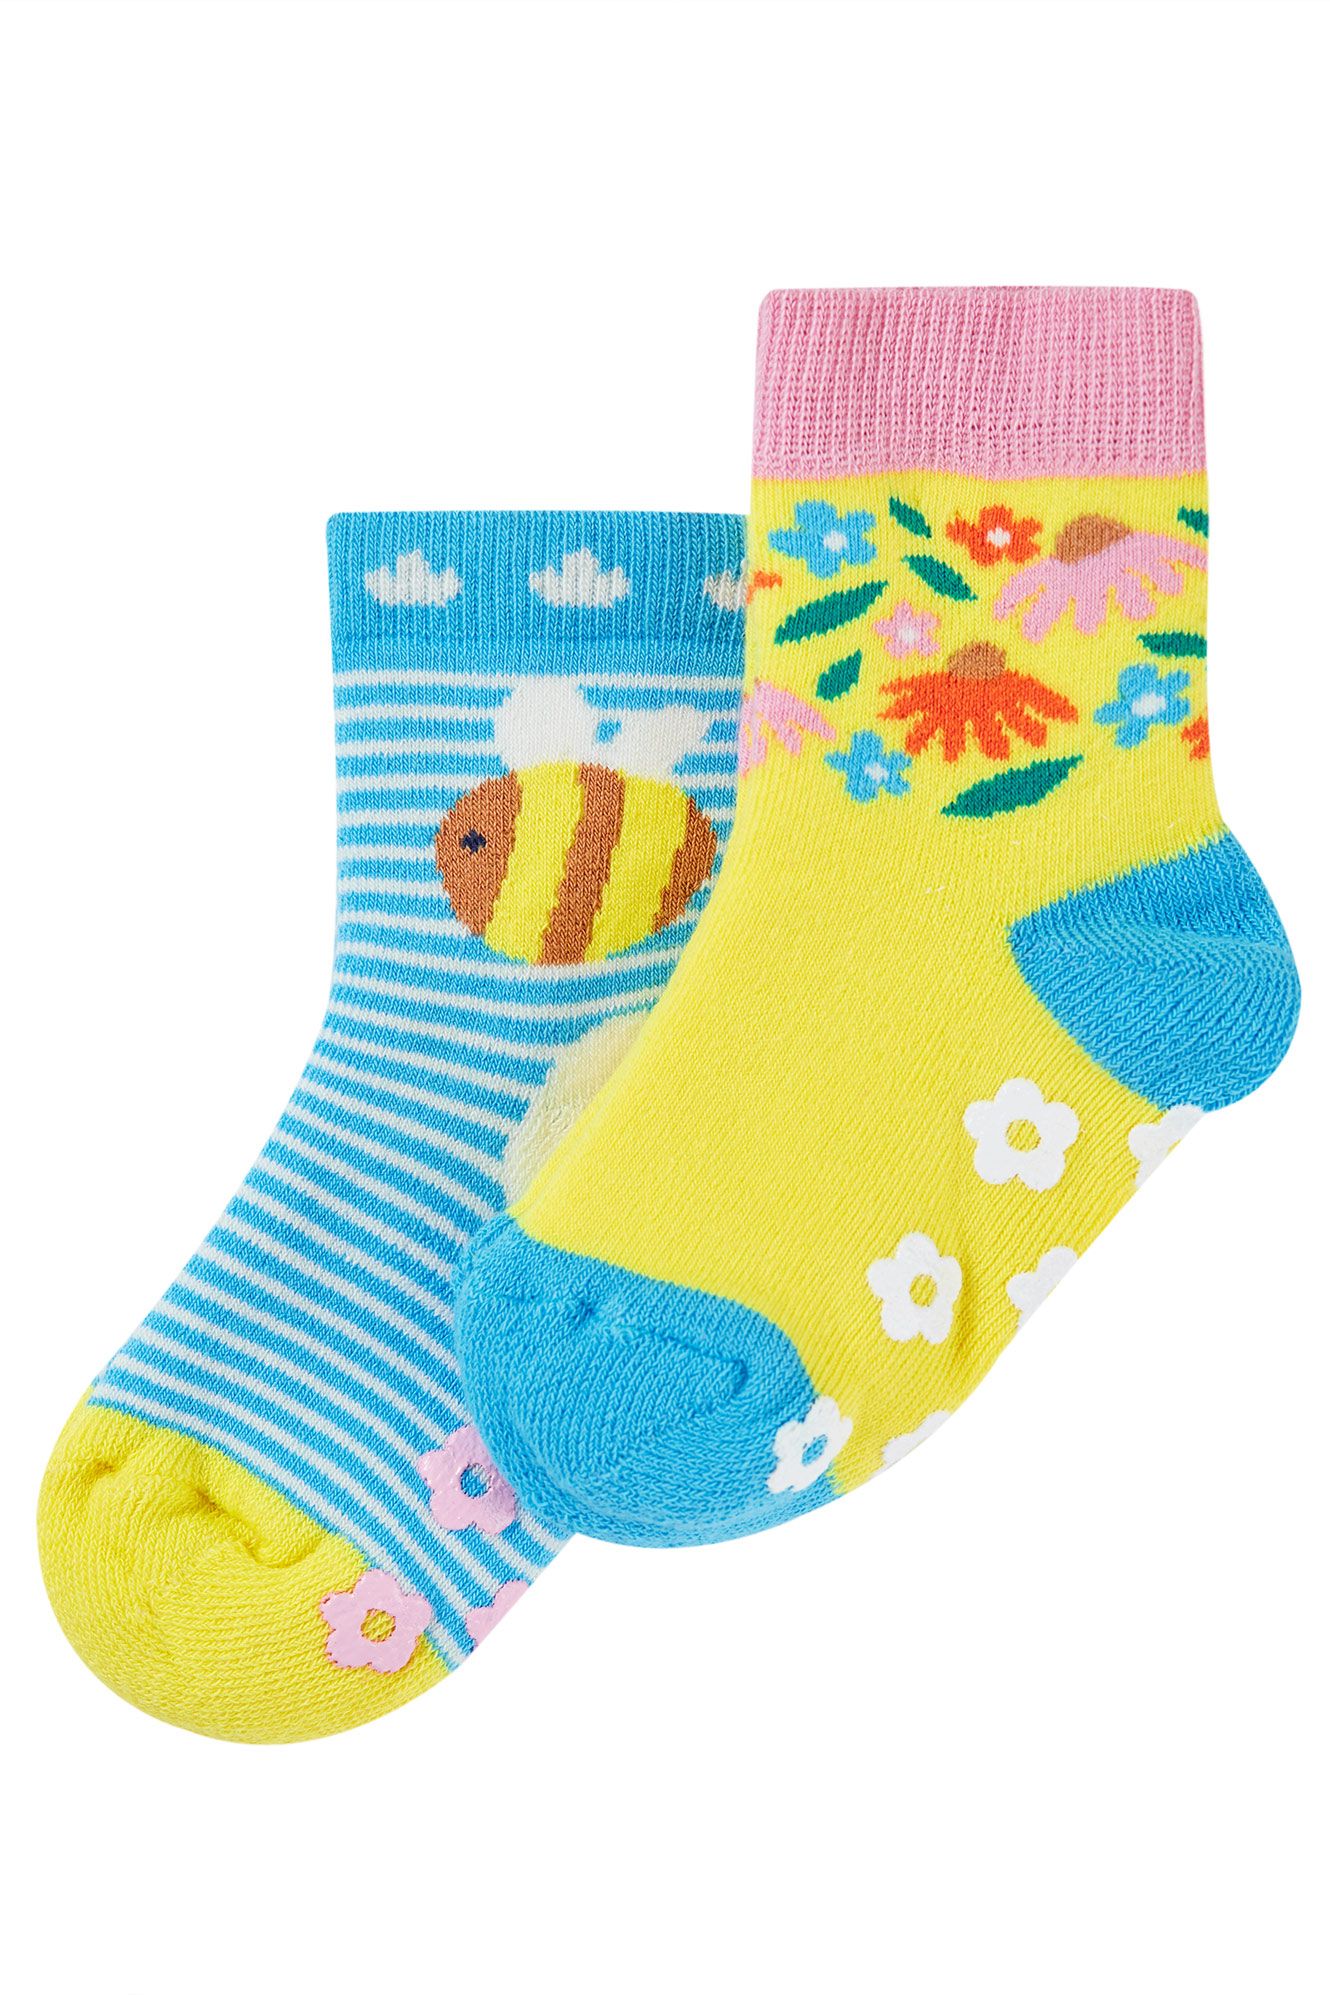 illy 🍉 on X: grippy socks? no. drippy socks. they got little